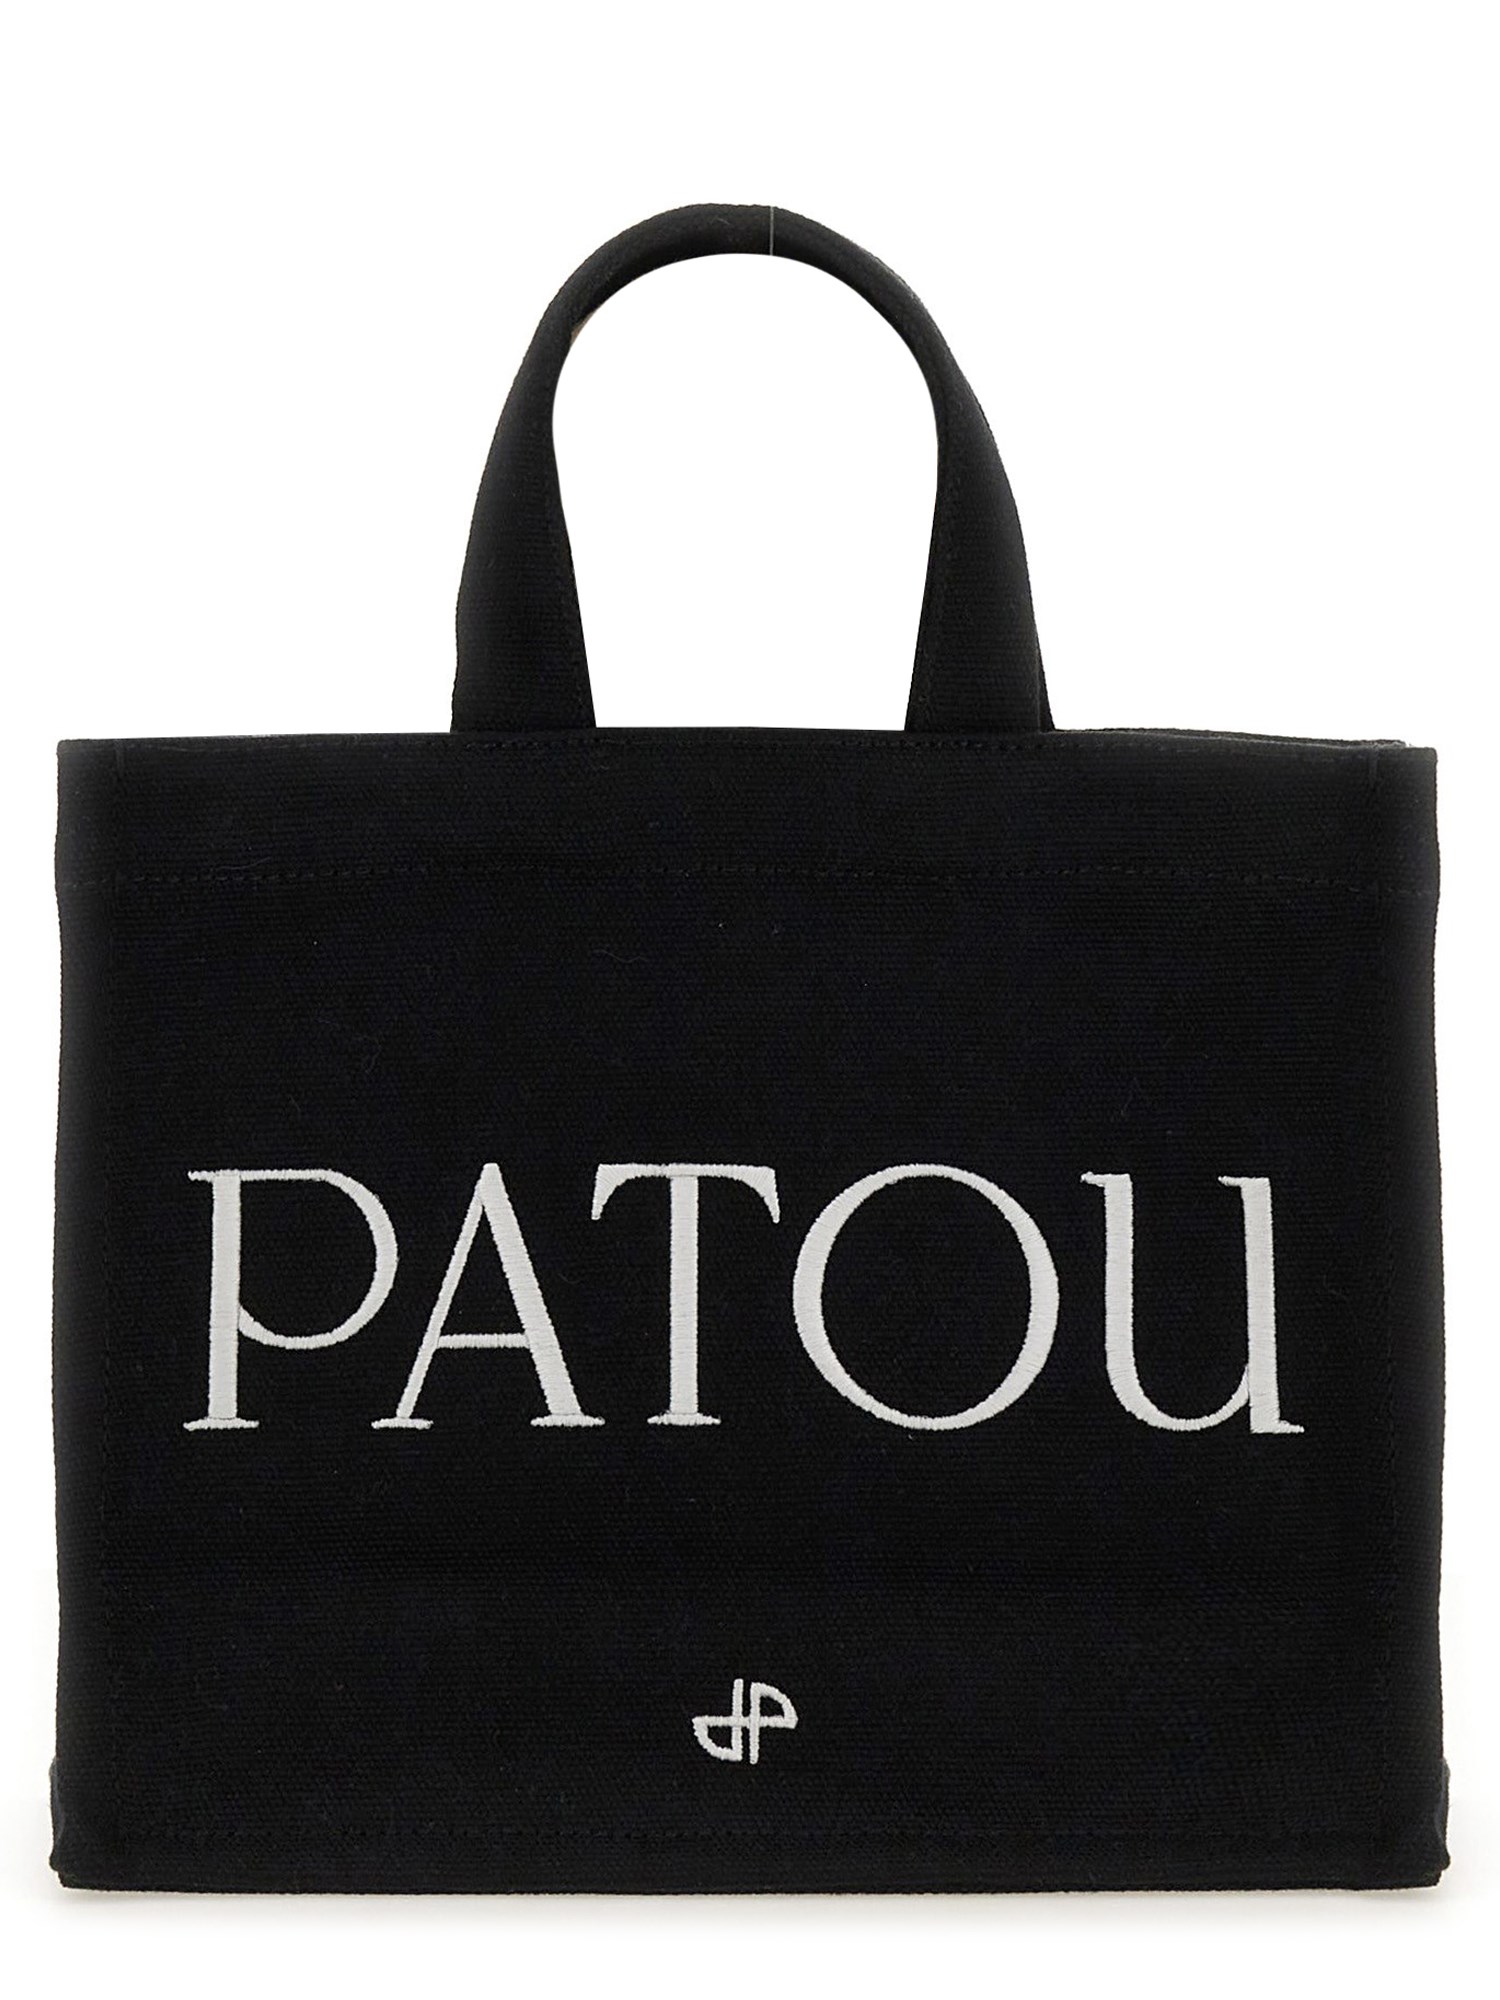 Shop Patou " Tote Bag In Black